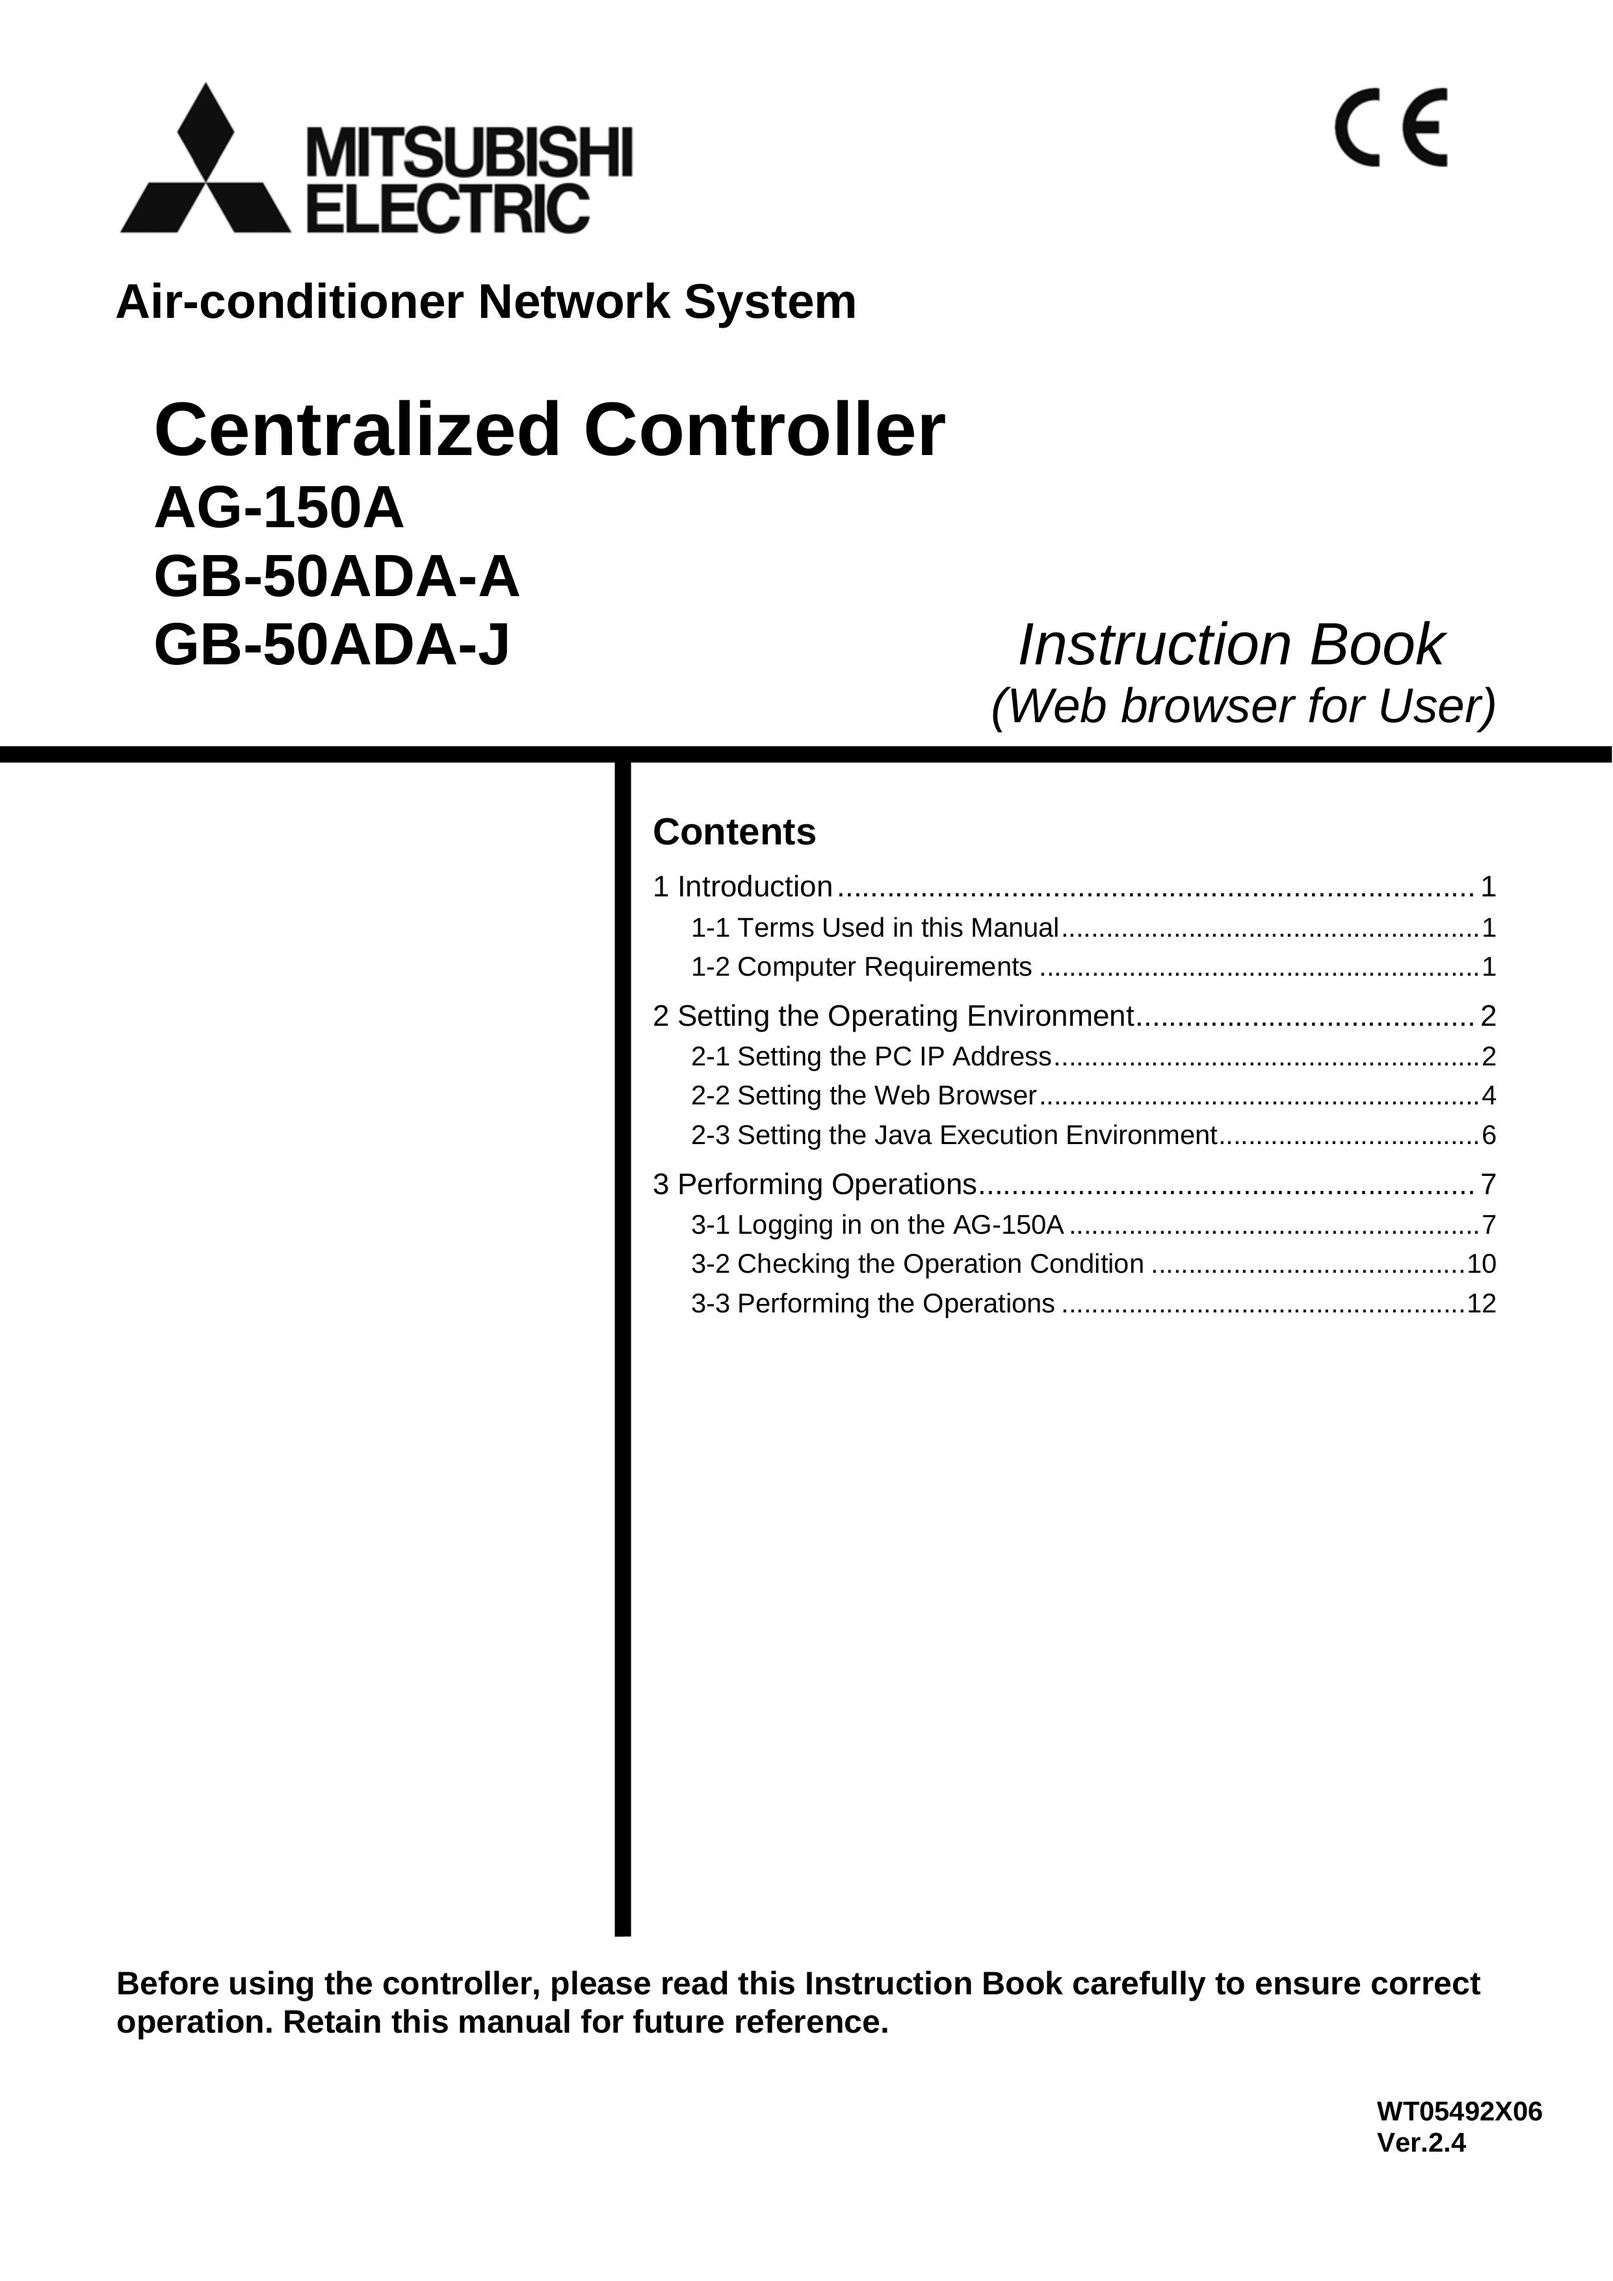 Mitsubishi Electronics AG-150A Air Conditioner User Manual